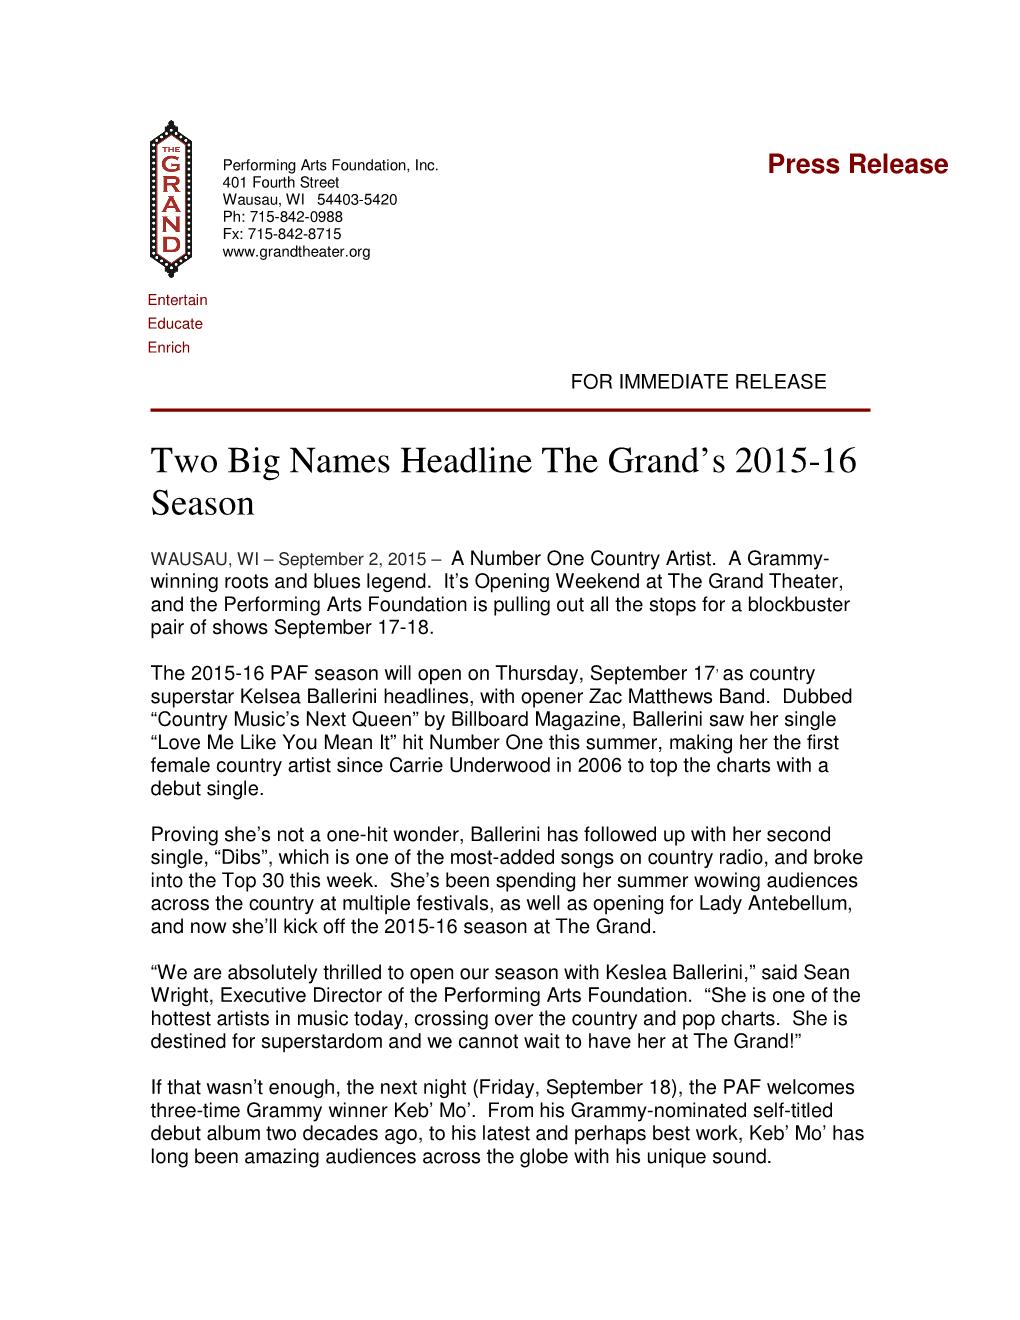 Two Big Names Headline the Grand's 2015-16 Season